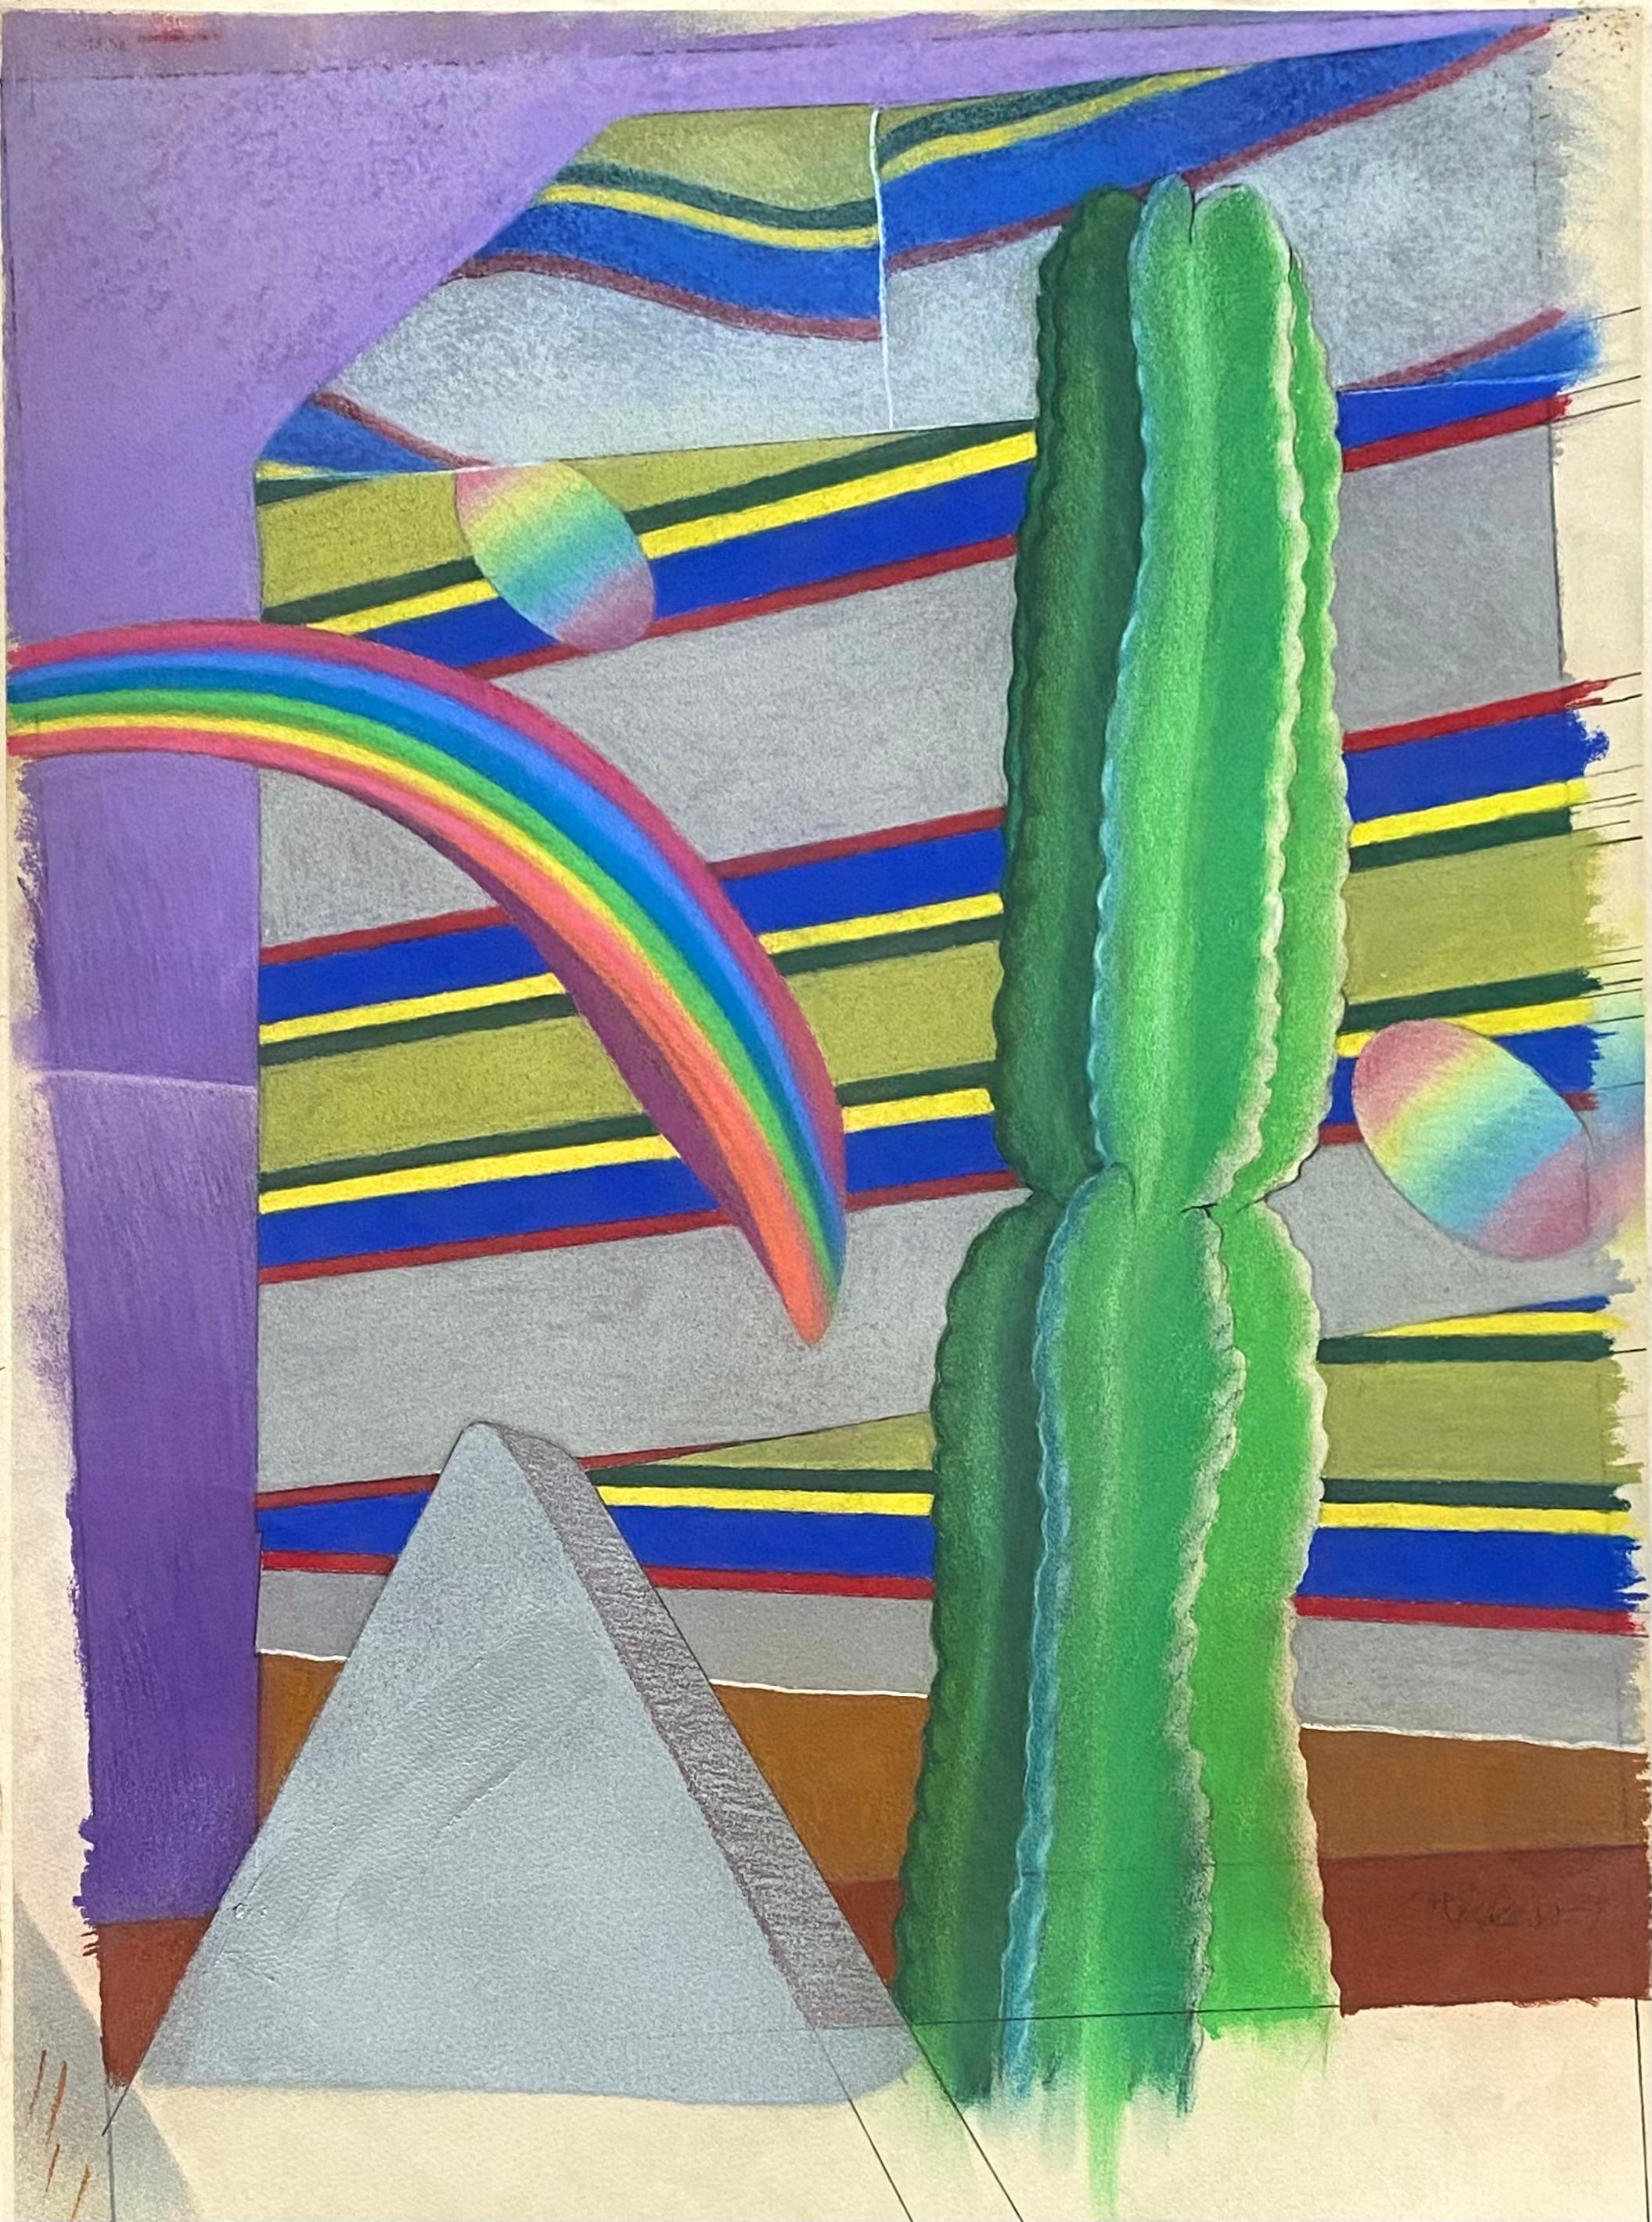 “Cactus, Pyramid, and Rainbow”